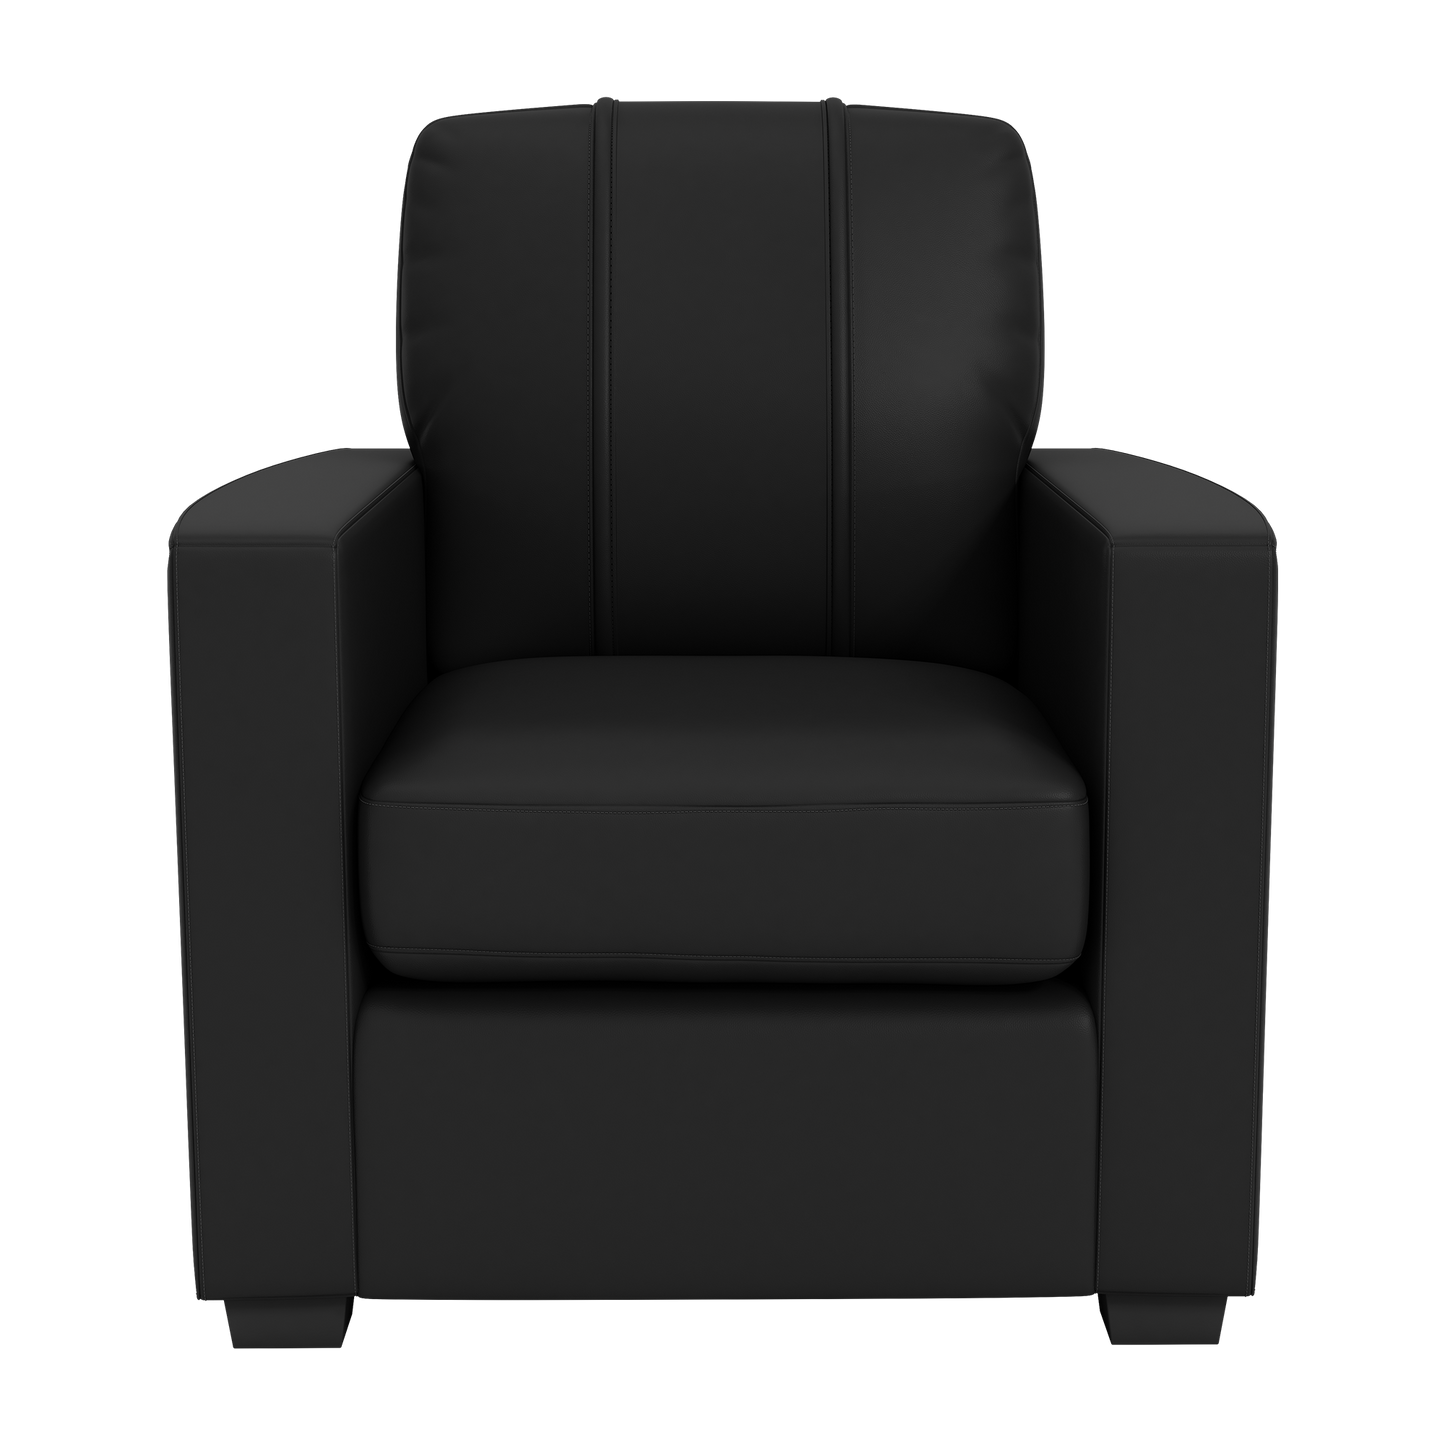 Silver Club Chair with Boston College Eagles Logo